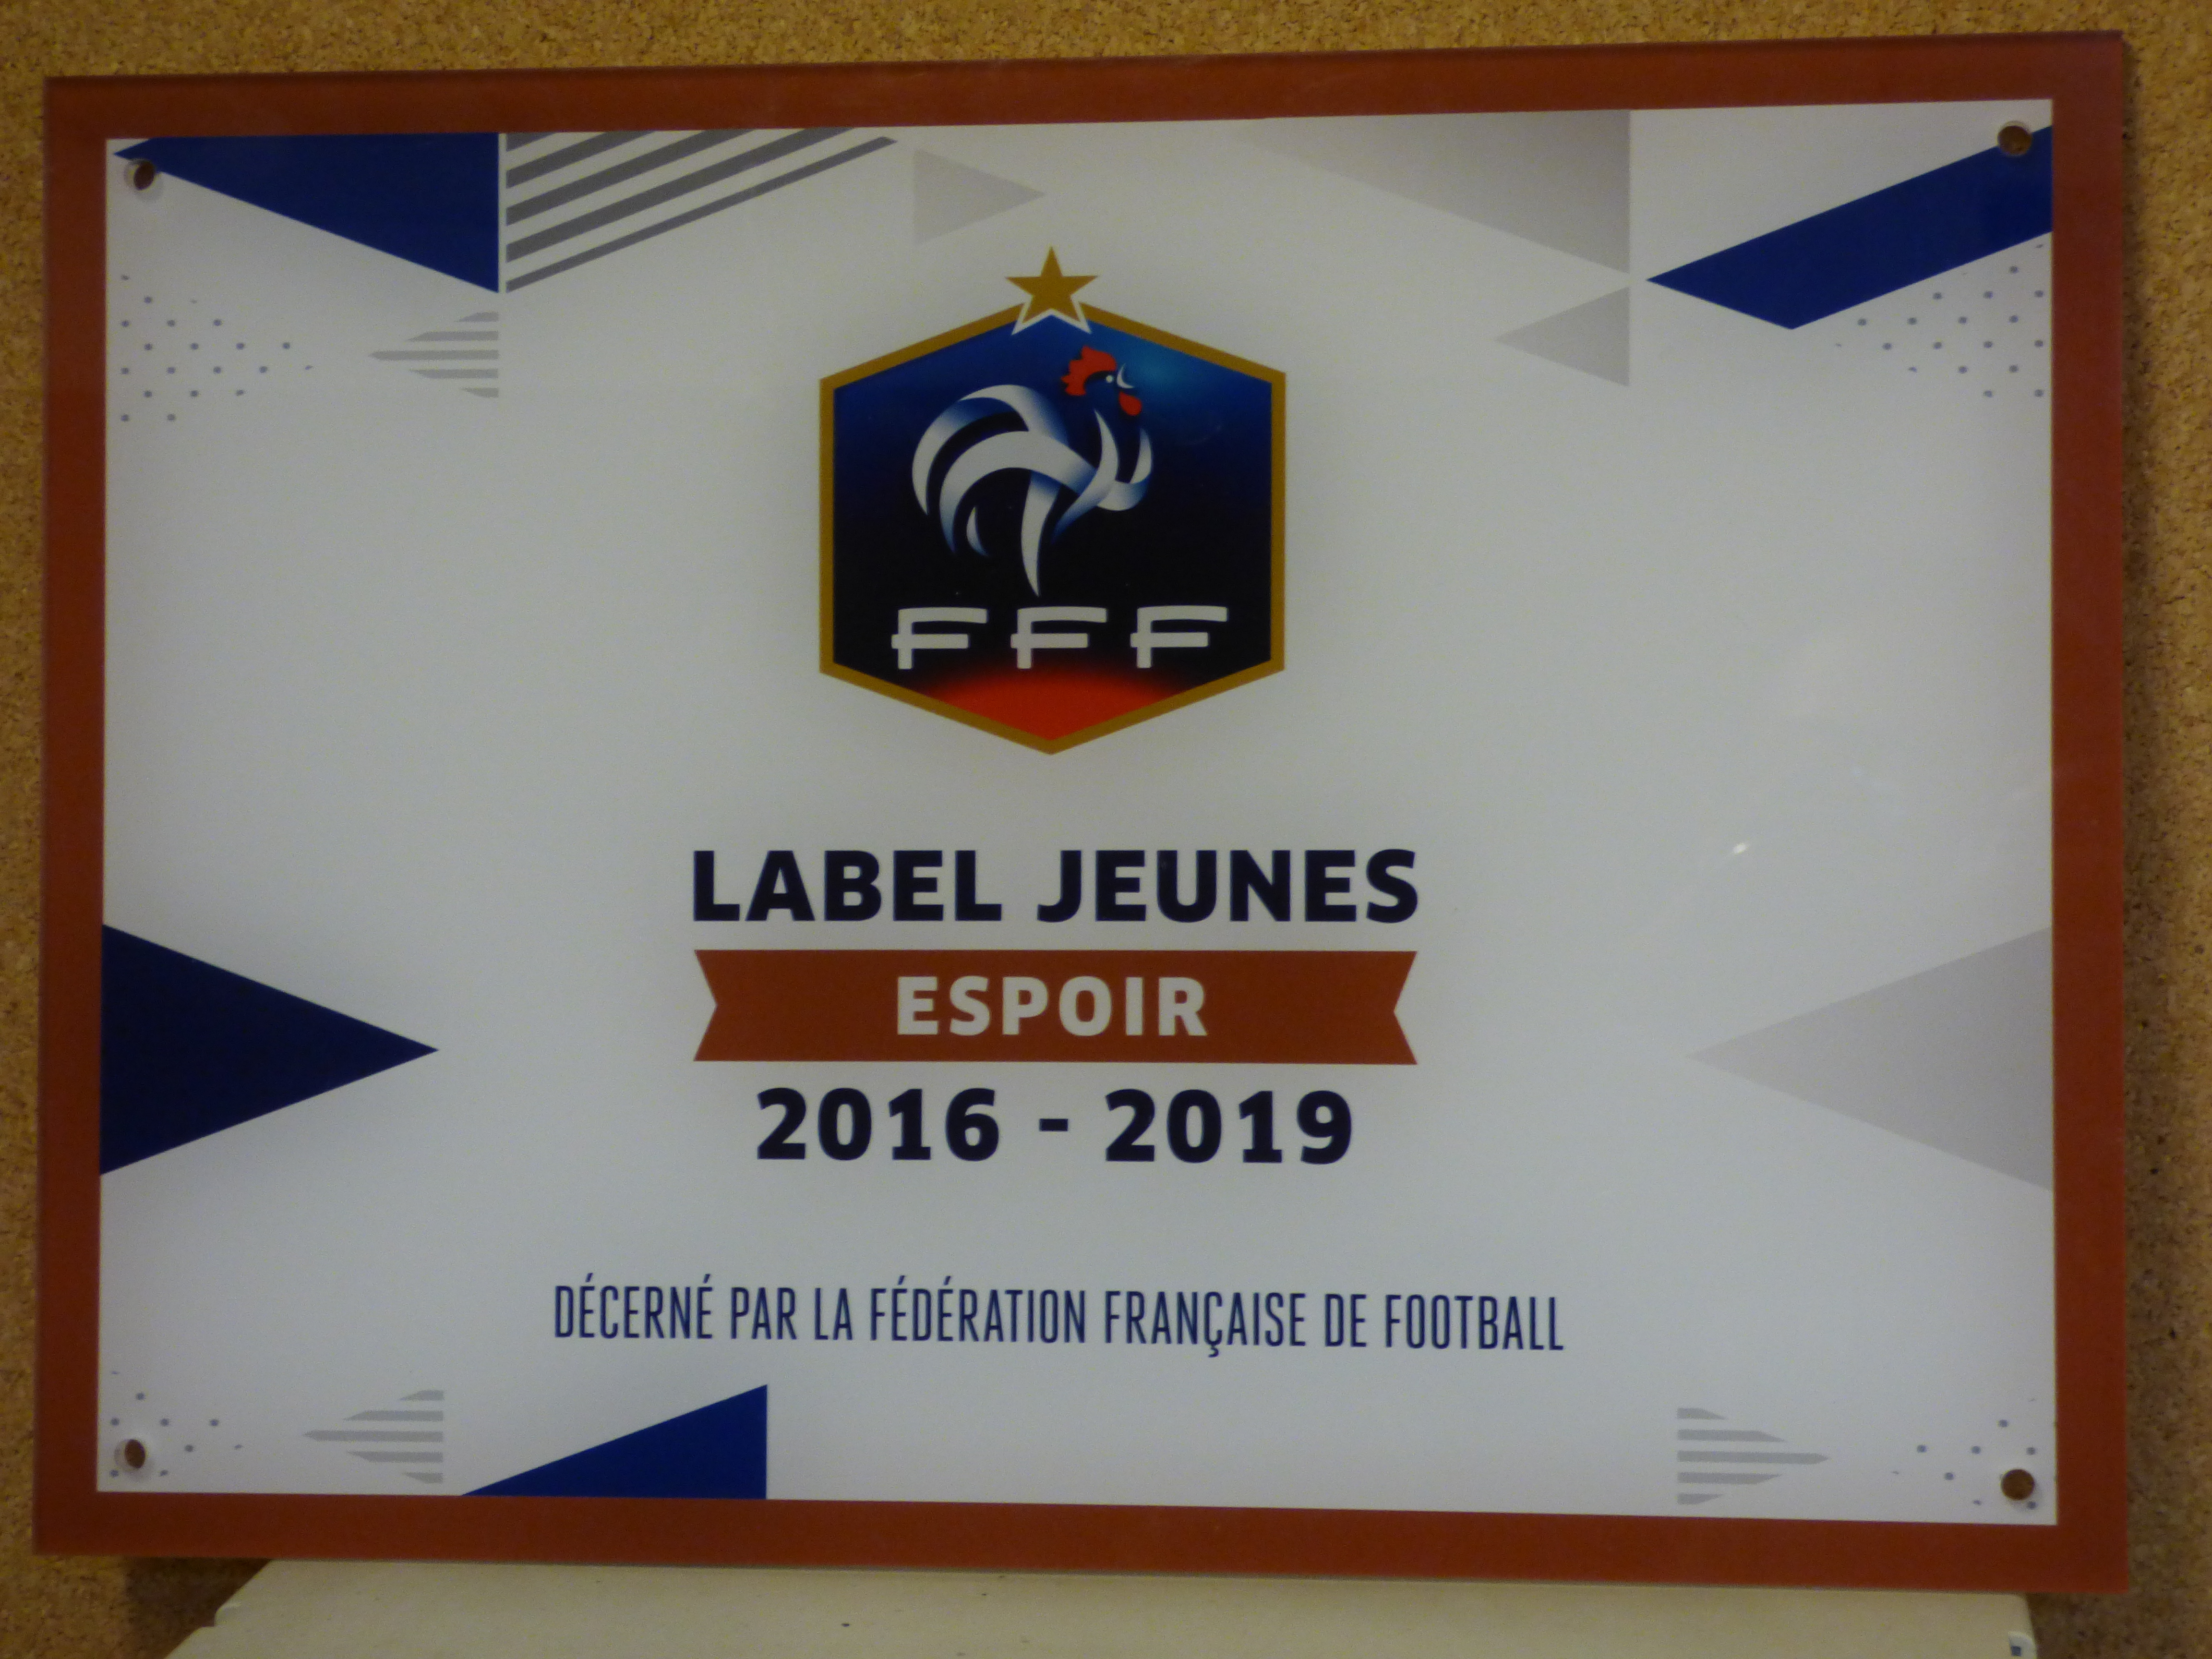 Label Jeunes Espoir 2016-2019